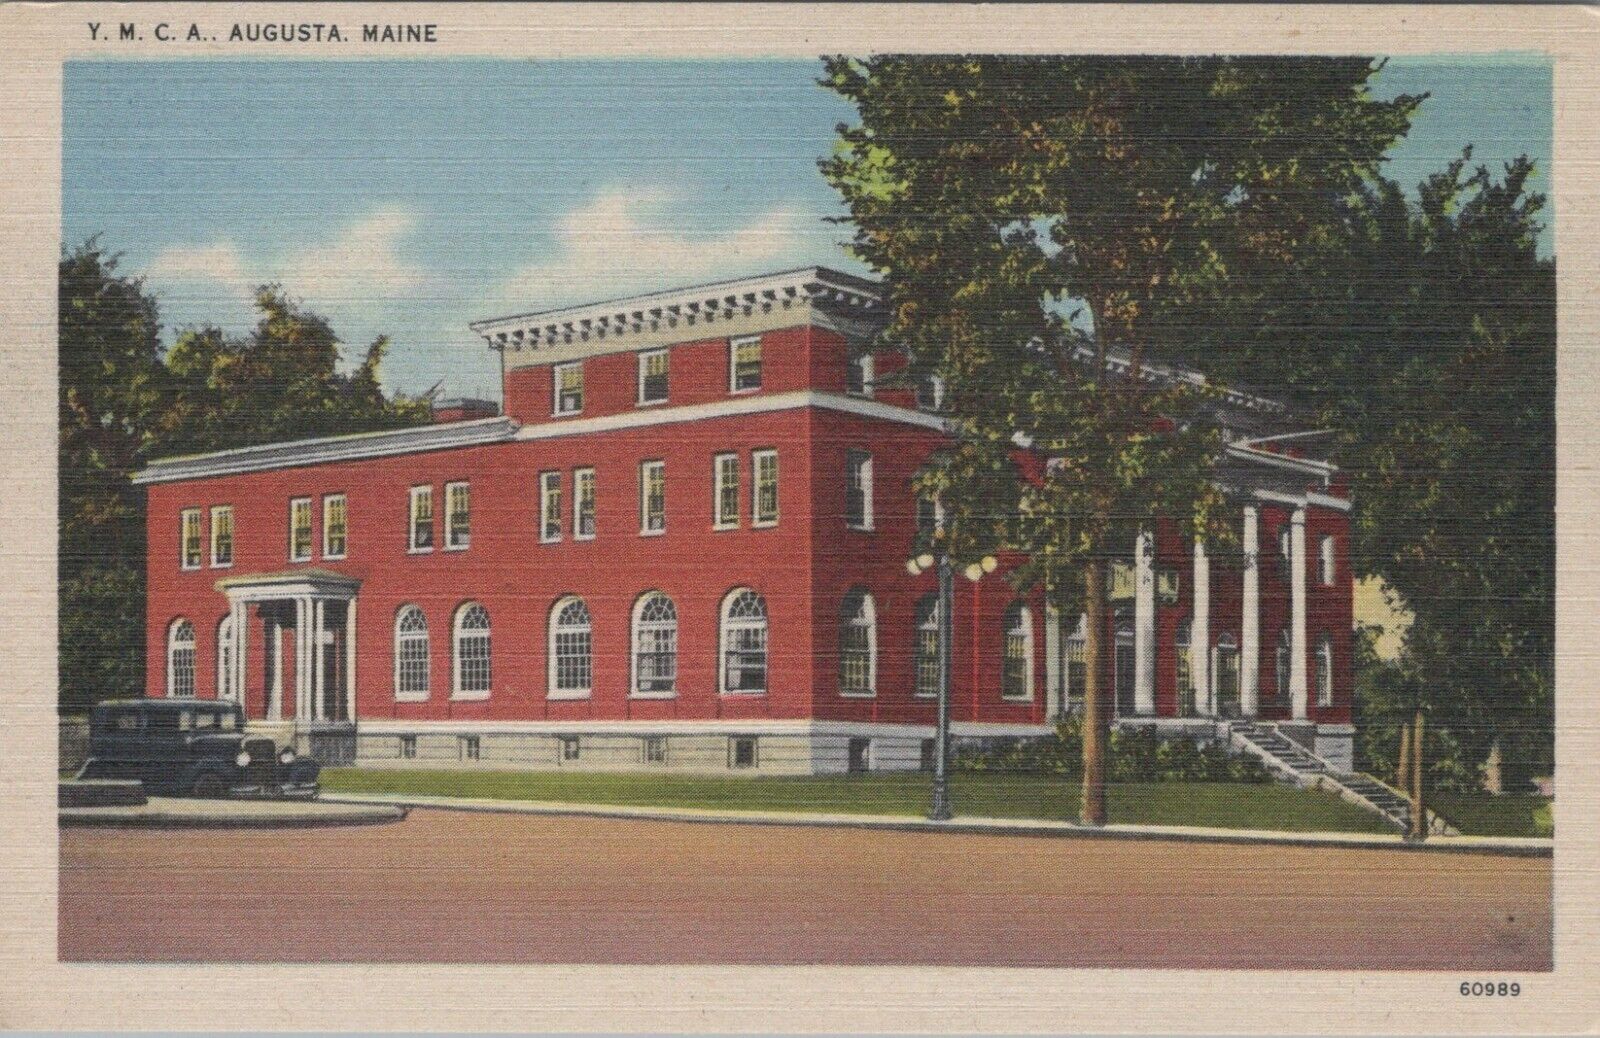 Y.M.C.A. Augusta Maine Buildings Classic Cars Linen Vintage Post Card